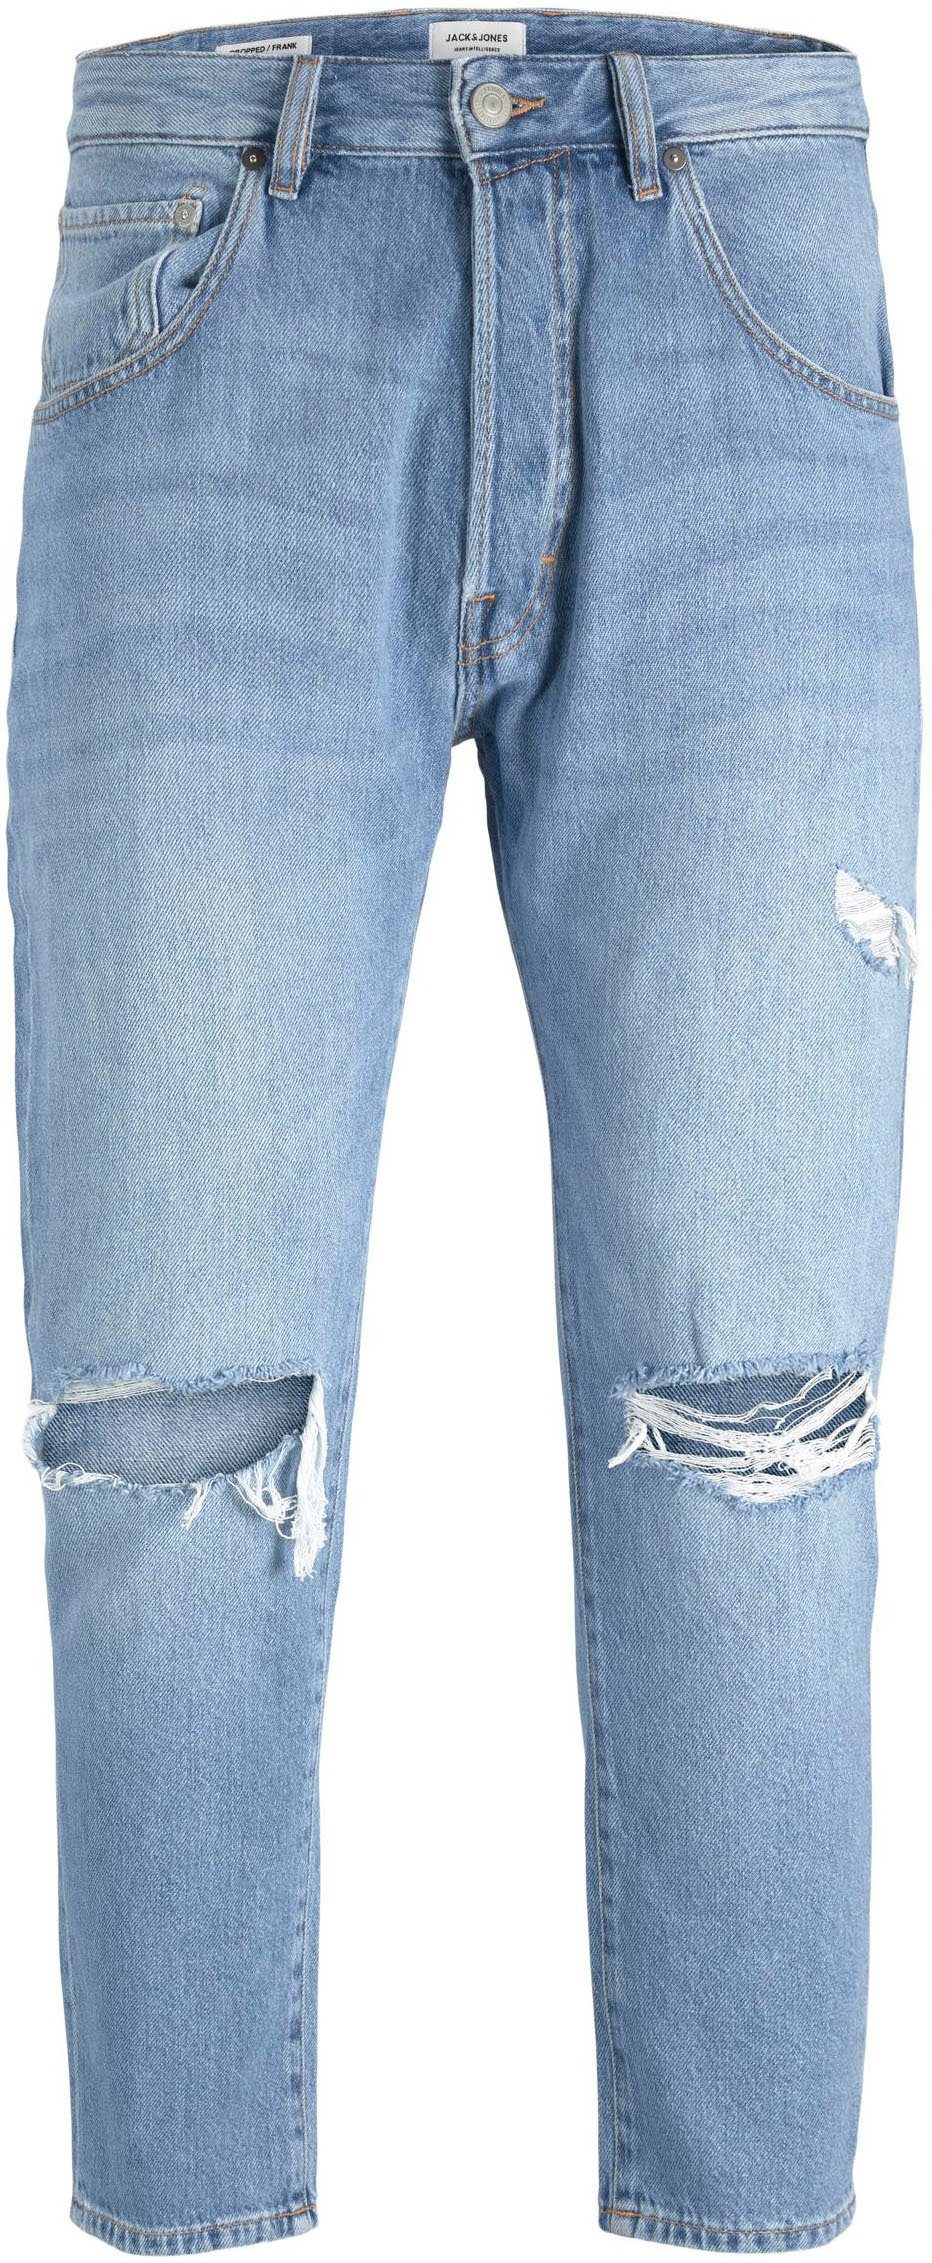 CROPPED Jack & JJORIGINAL JJIFRANK Jones Tapered-fit-Jeans light-blue-denim